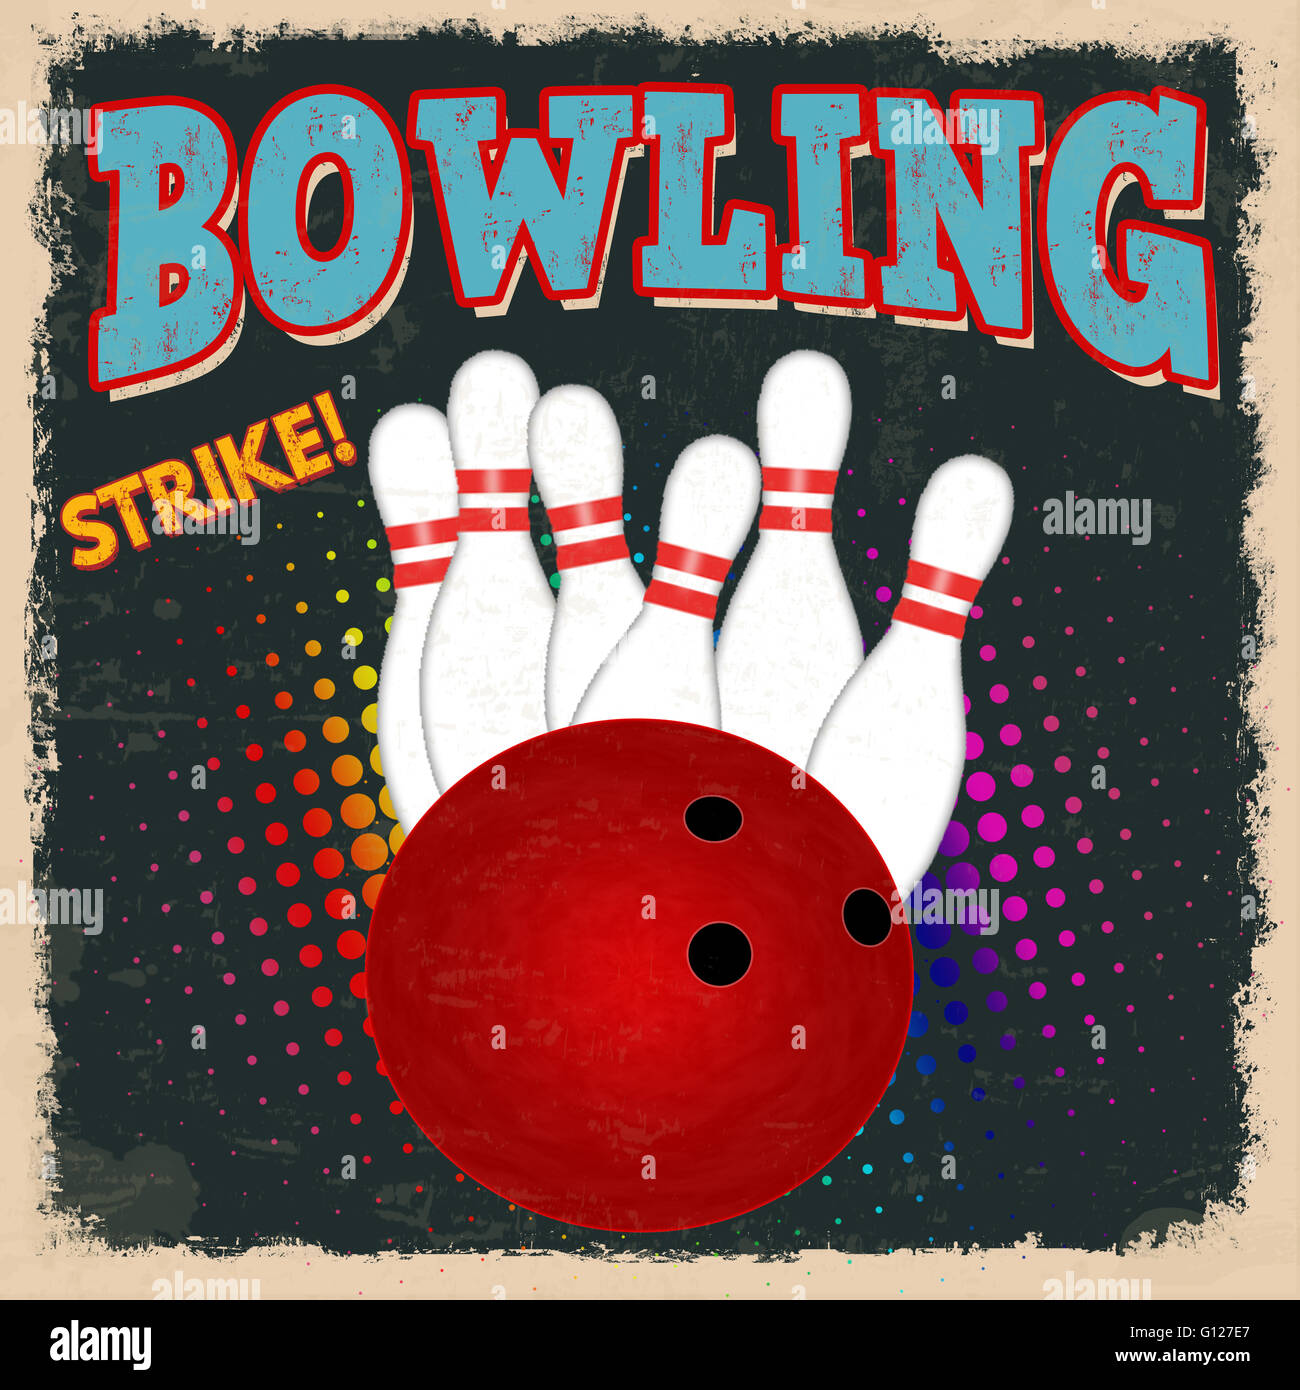 Bowling retro poster design template on dark background, vector illustration Stock Photo